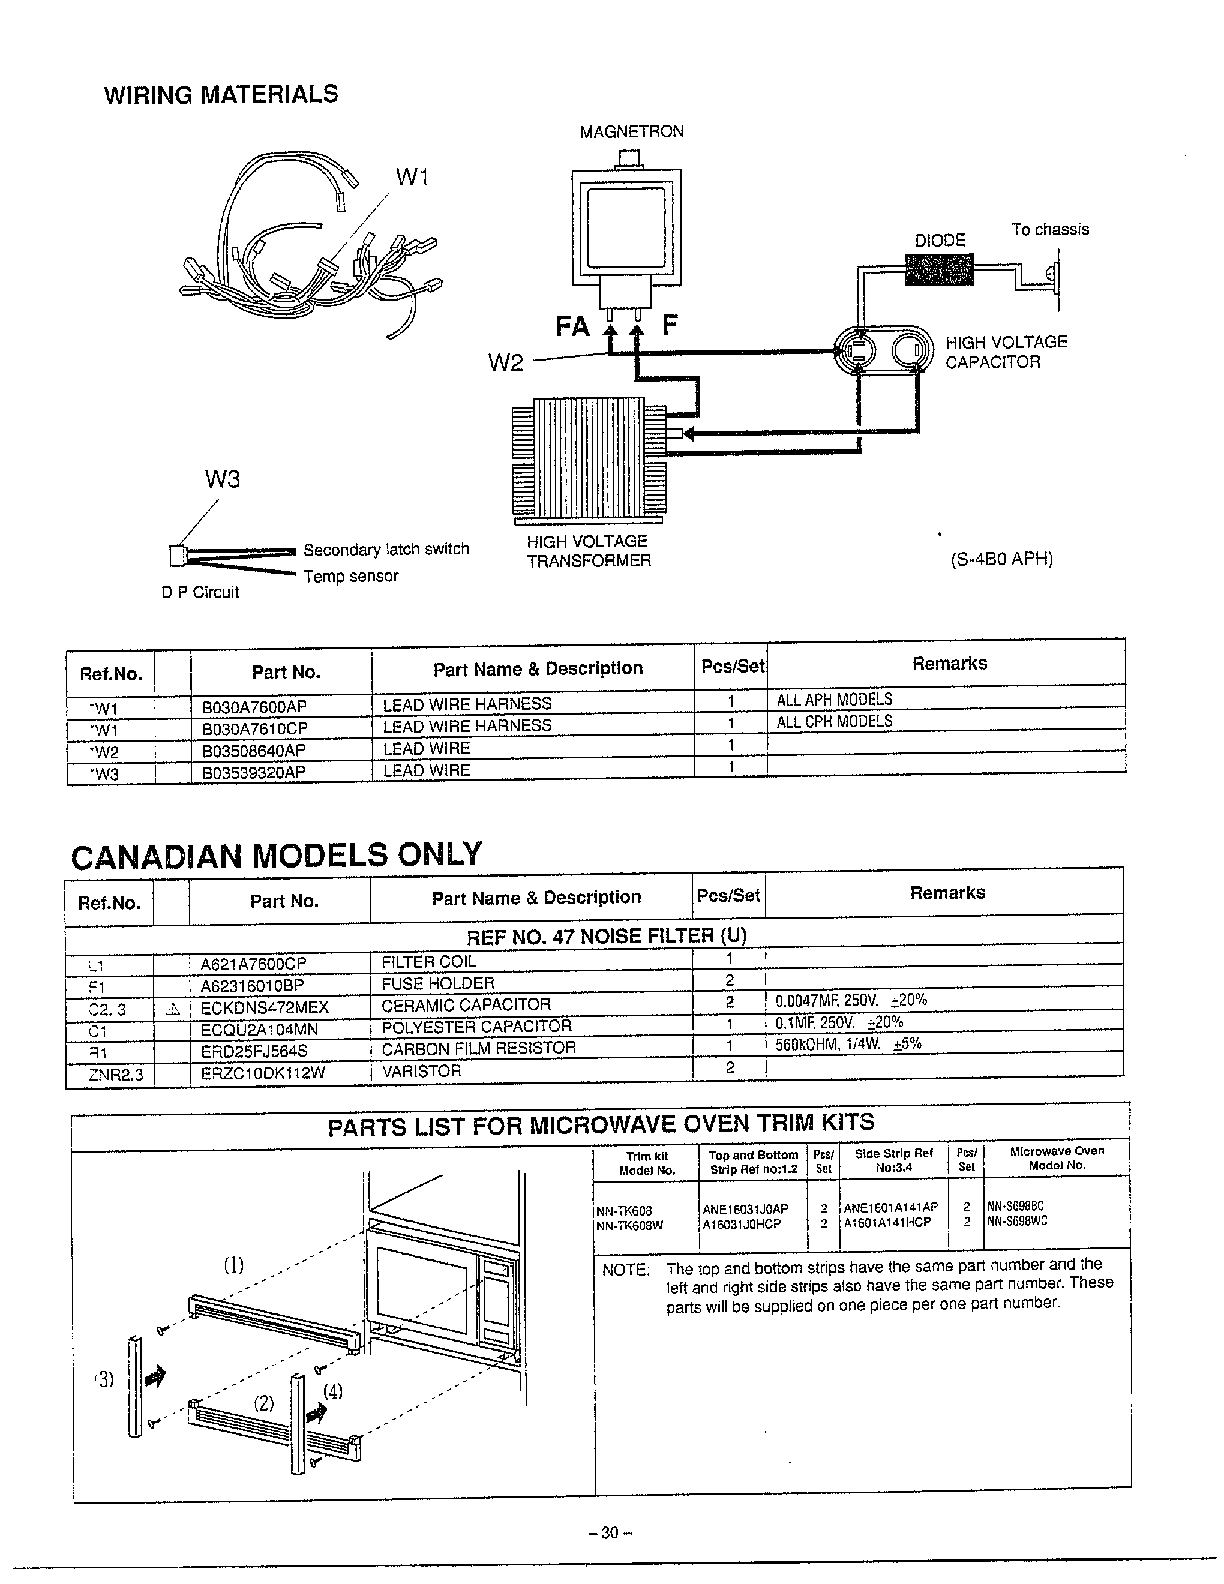 Wiring  Noise Filter  Oven Trim Kits Diagram  U0026 Parts List